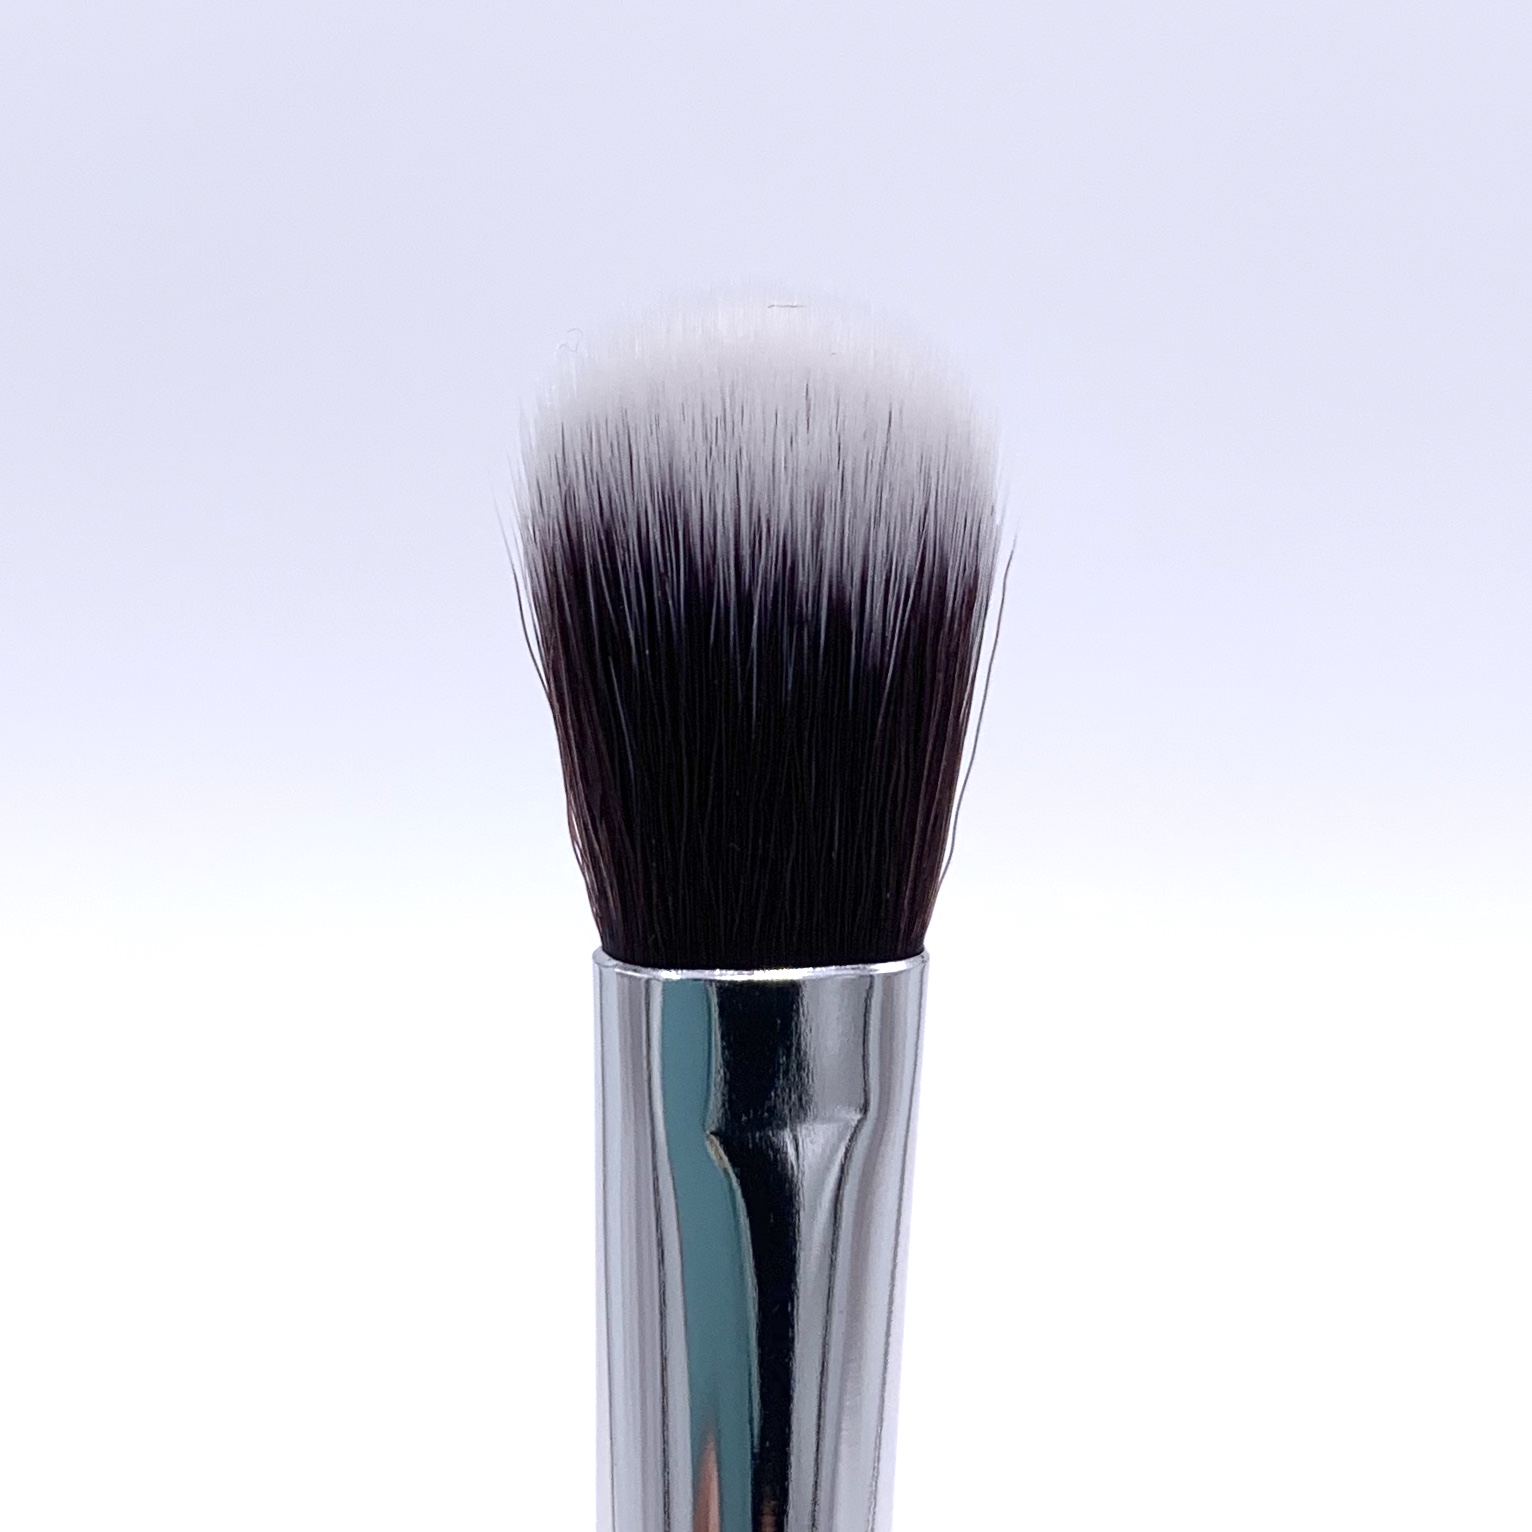 Beau Gâchis Cosmetics Brush Illuminator Close-Up for Ipsy Glam Bag September 2020